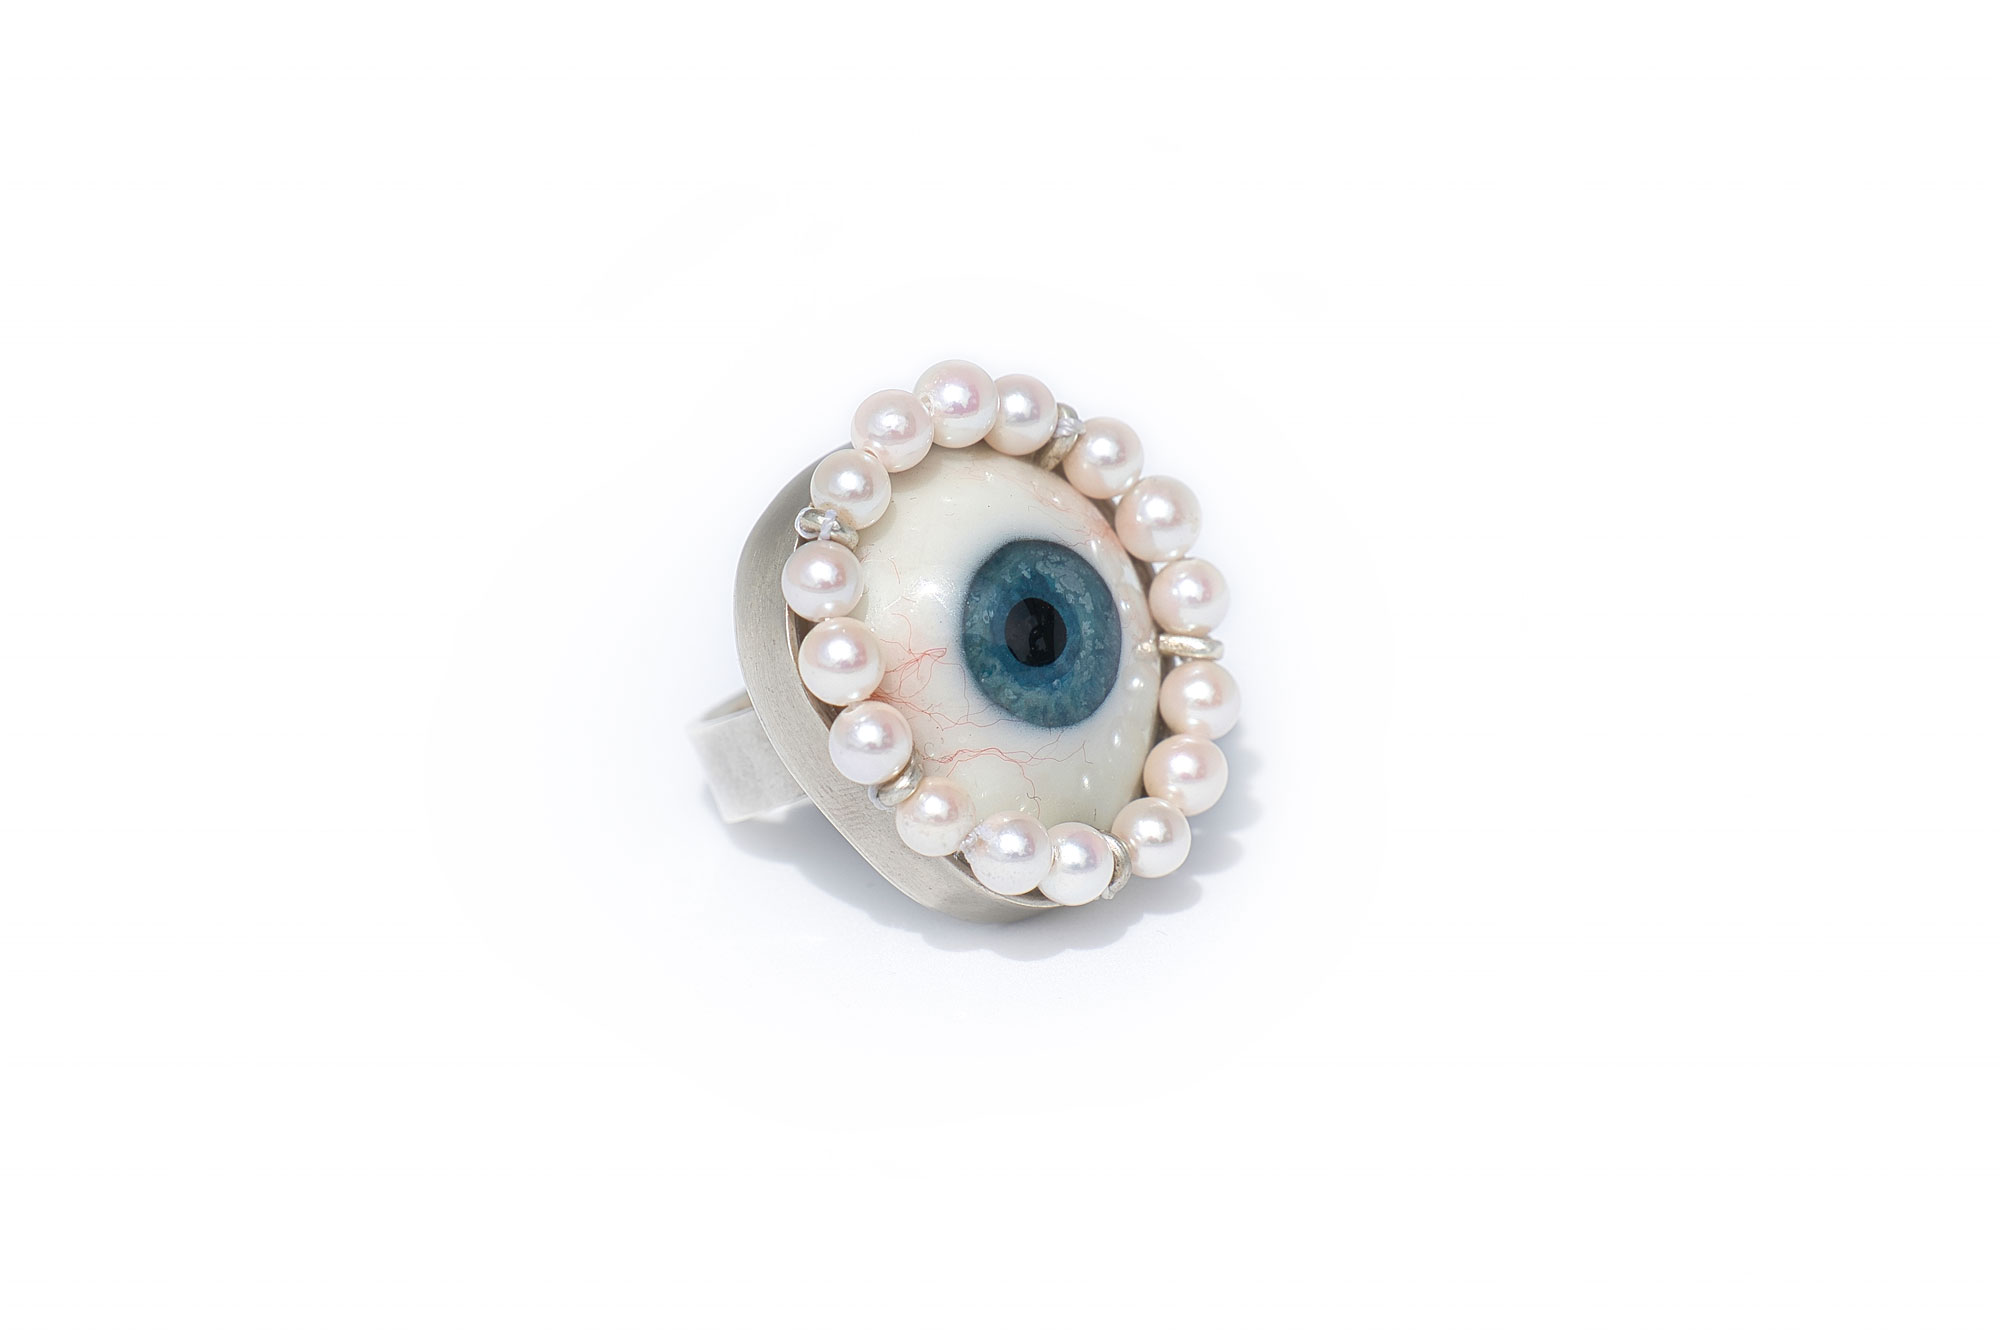 Bague - argent 925, prothèse oculaire, perles akoya - 2022  - Photo : Yves Martin